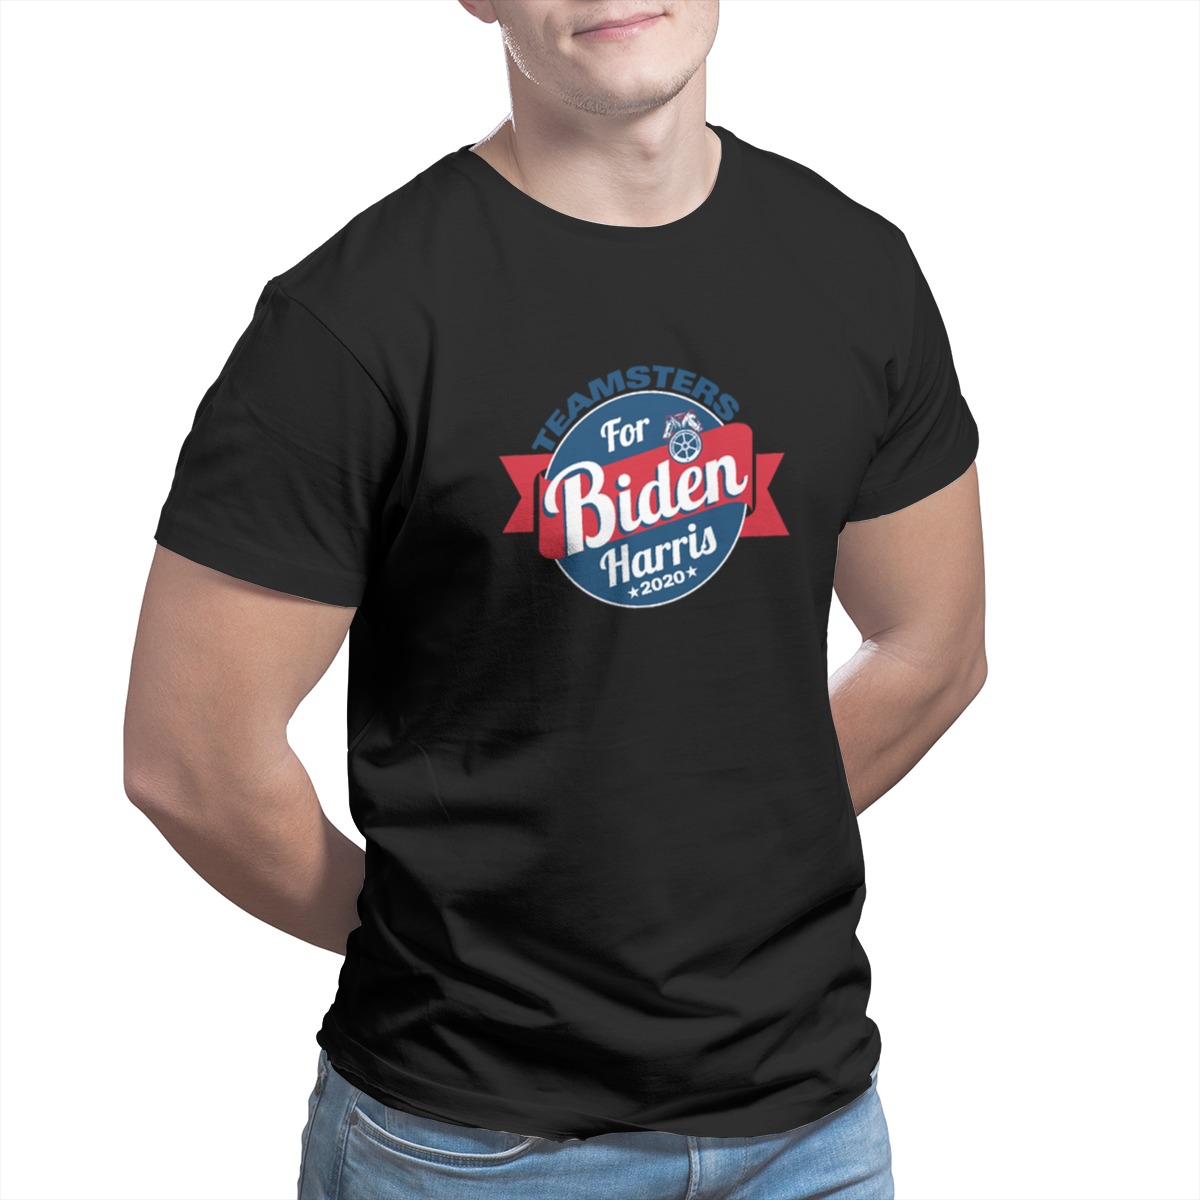 10 Biden Harris Men's T Shirt Novelty Tops Bitumen Bike Life Tees Clothes Cotton Printed T-Shirt Plus Size Men Clothing 3310